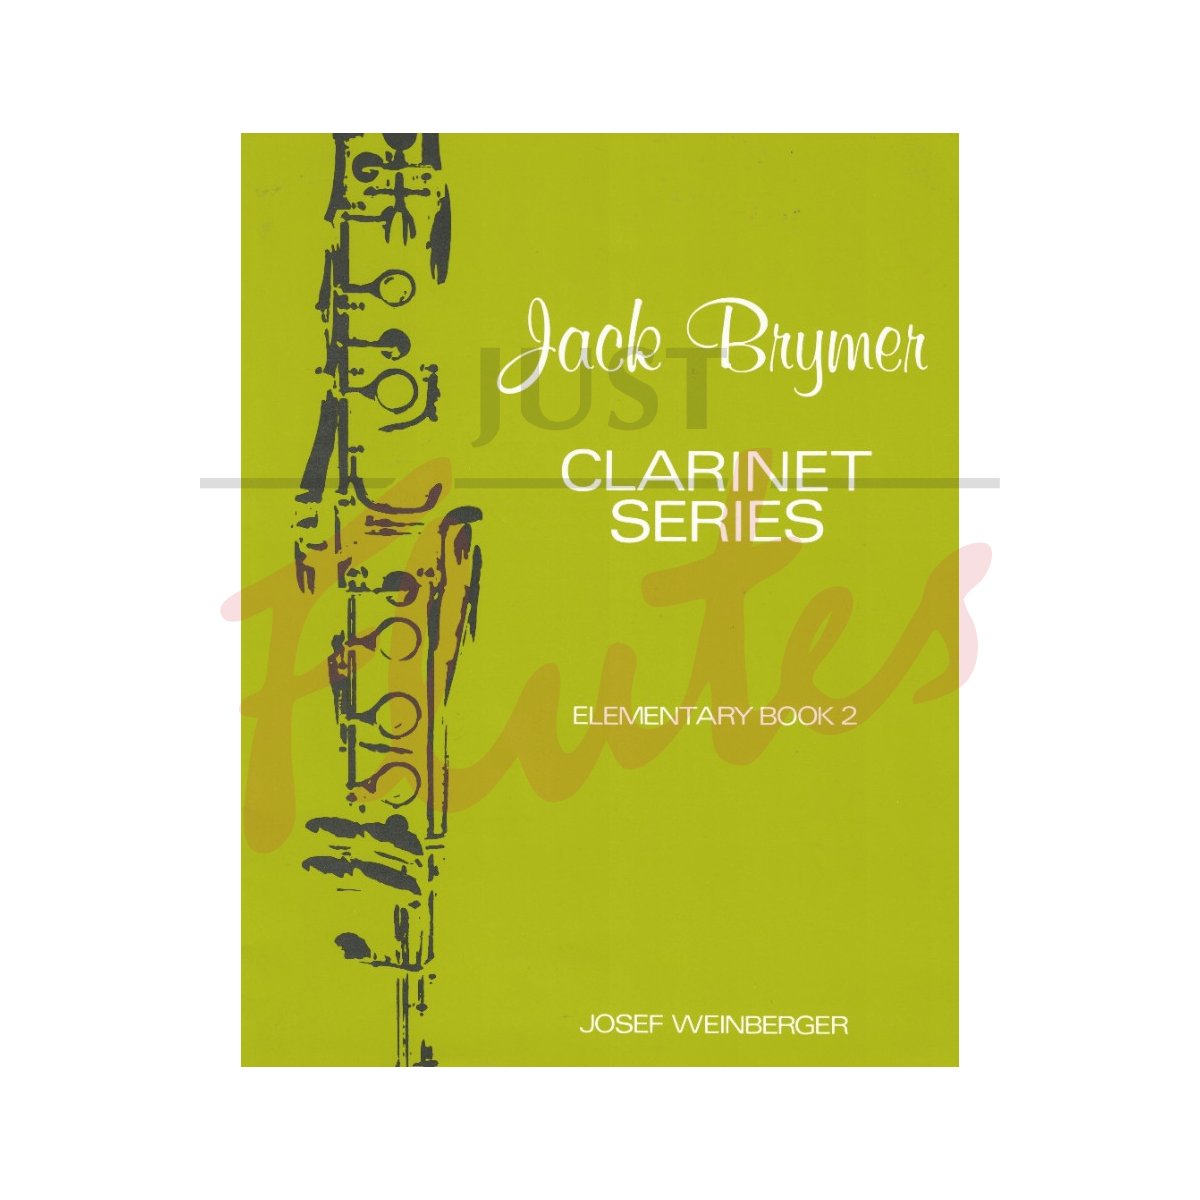 Clarinet Series Moderate Book 1